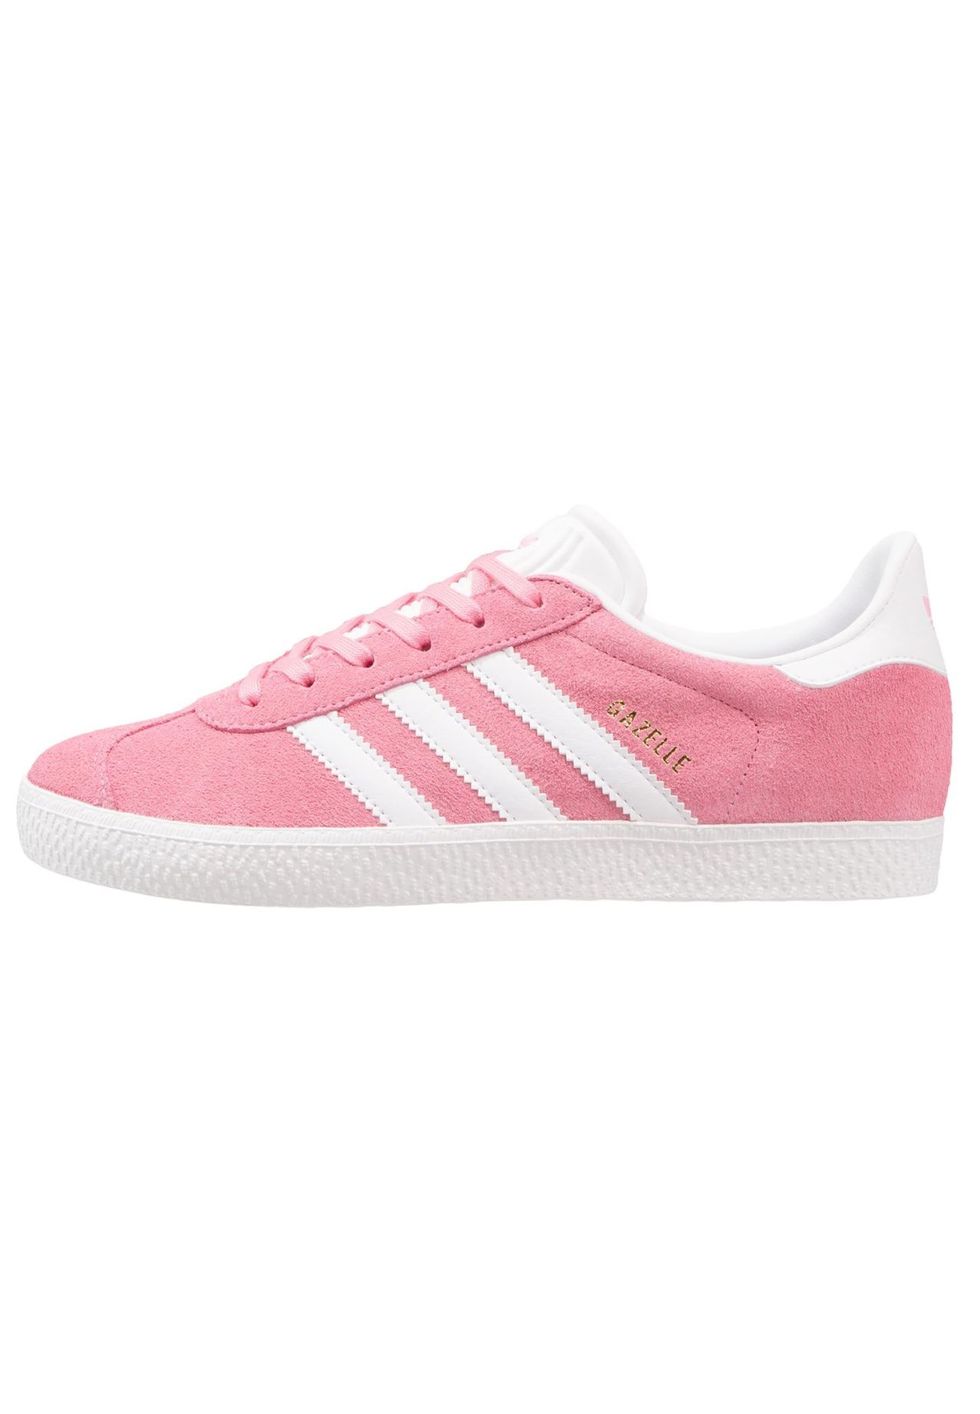 Sneakers bambini come le gazzelle rosa di Adidas